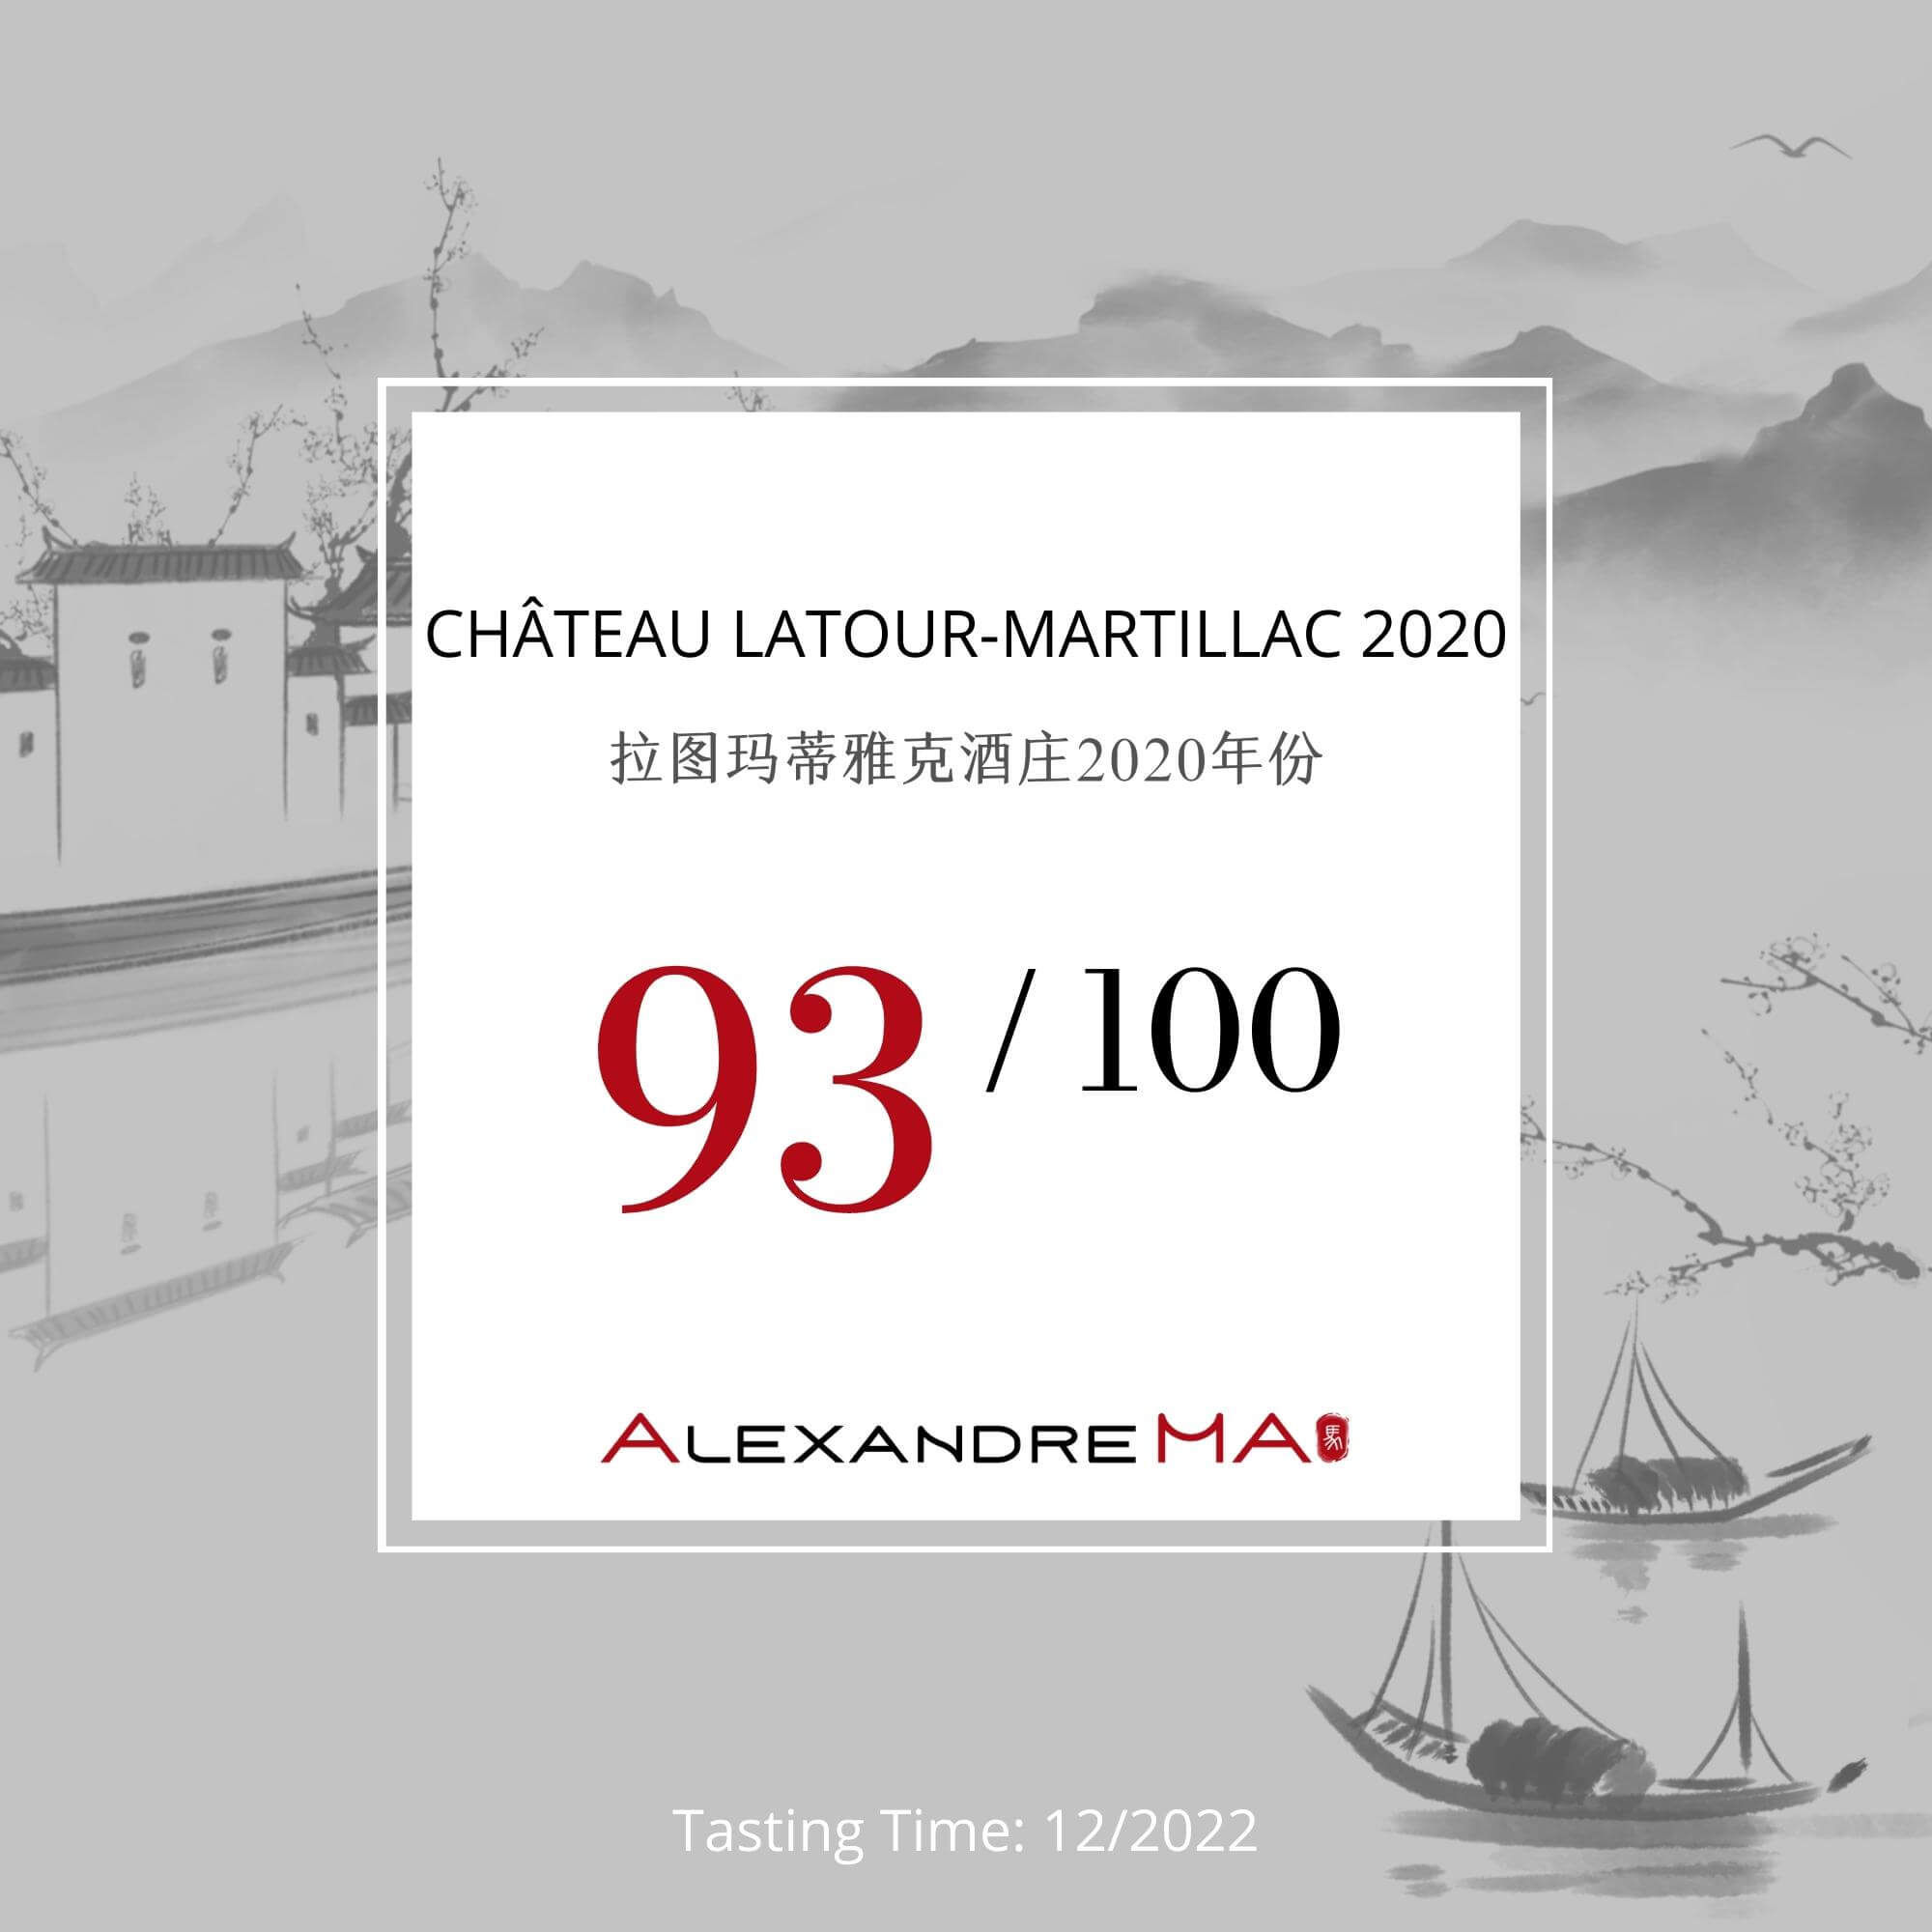 Château Latour-Martillac 2020 - Alexandre MA